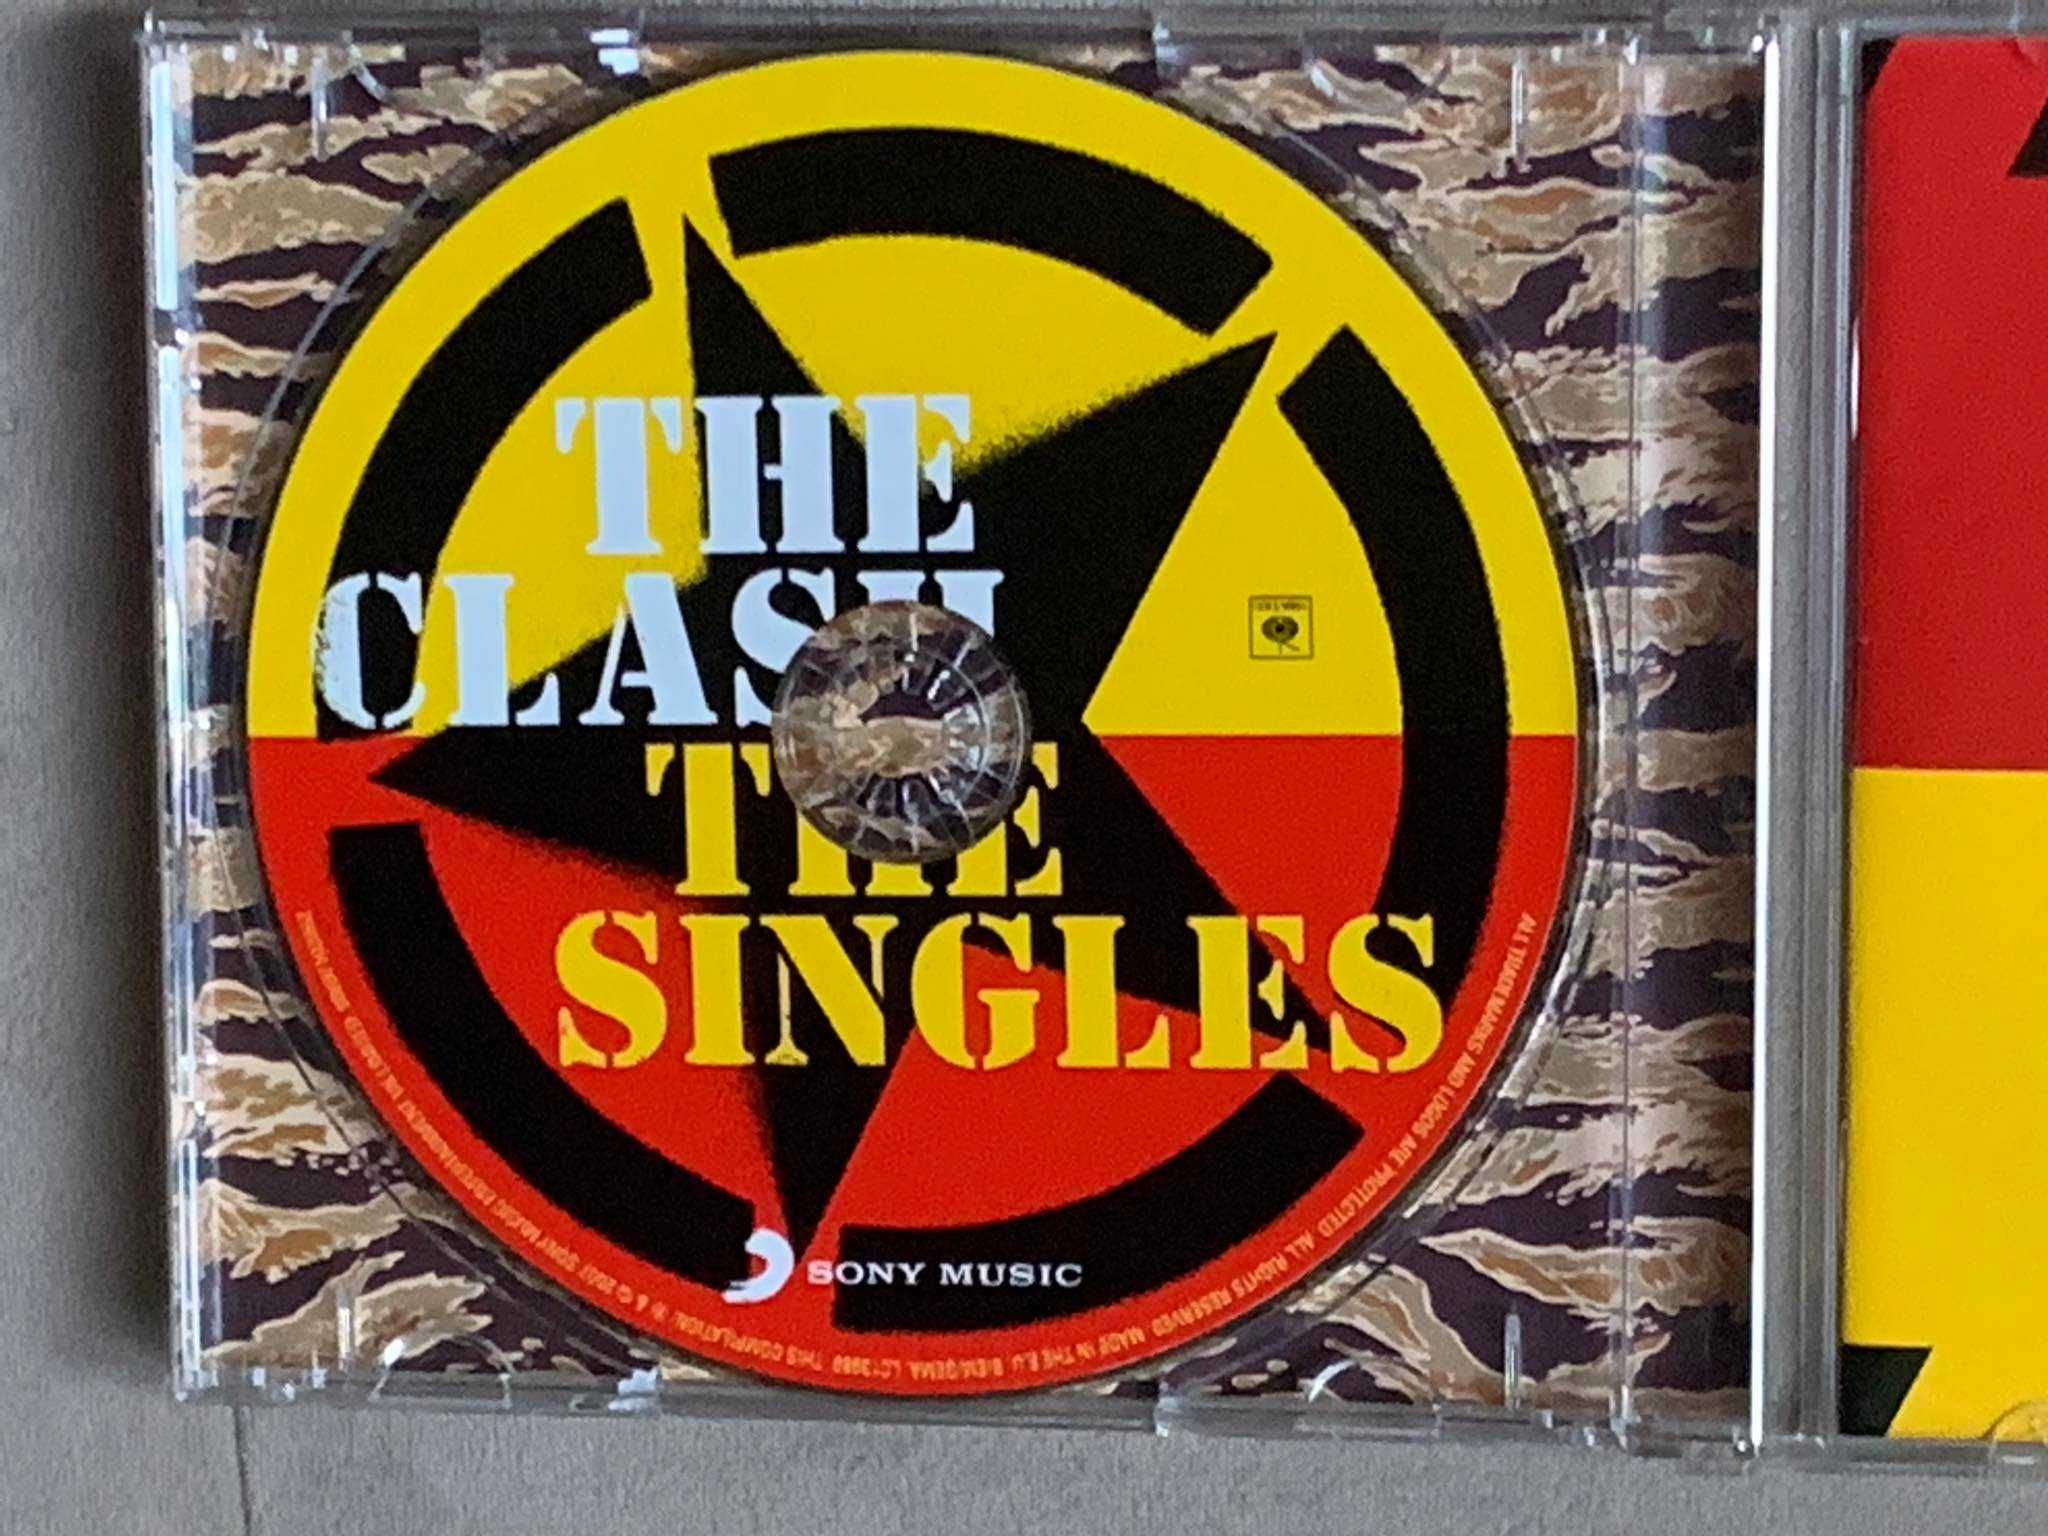 The Clash - The Singles - CD - jak NOWA!